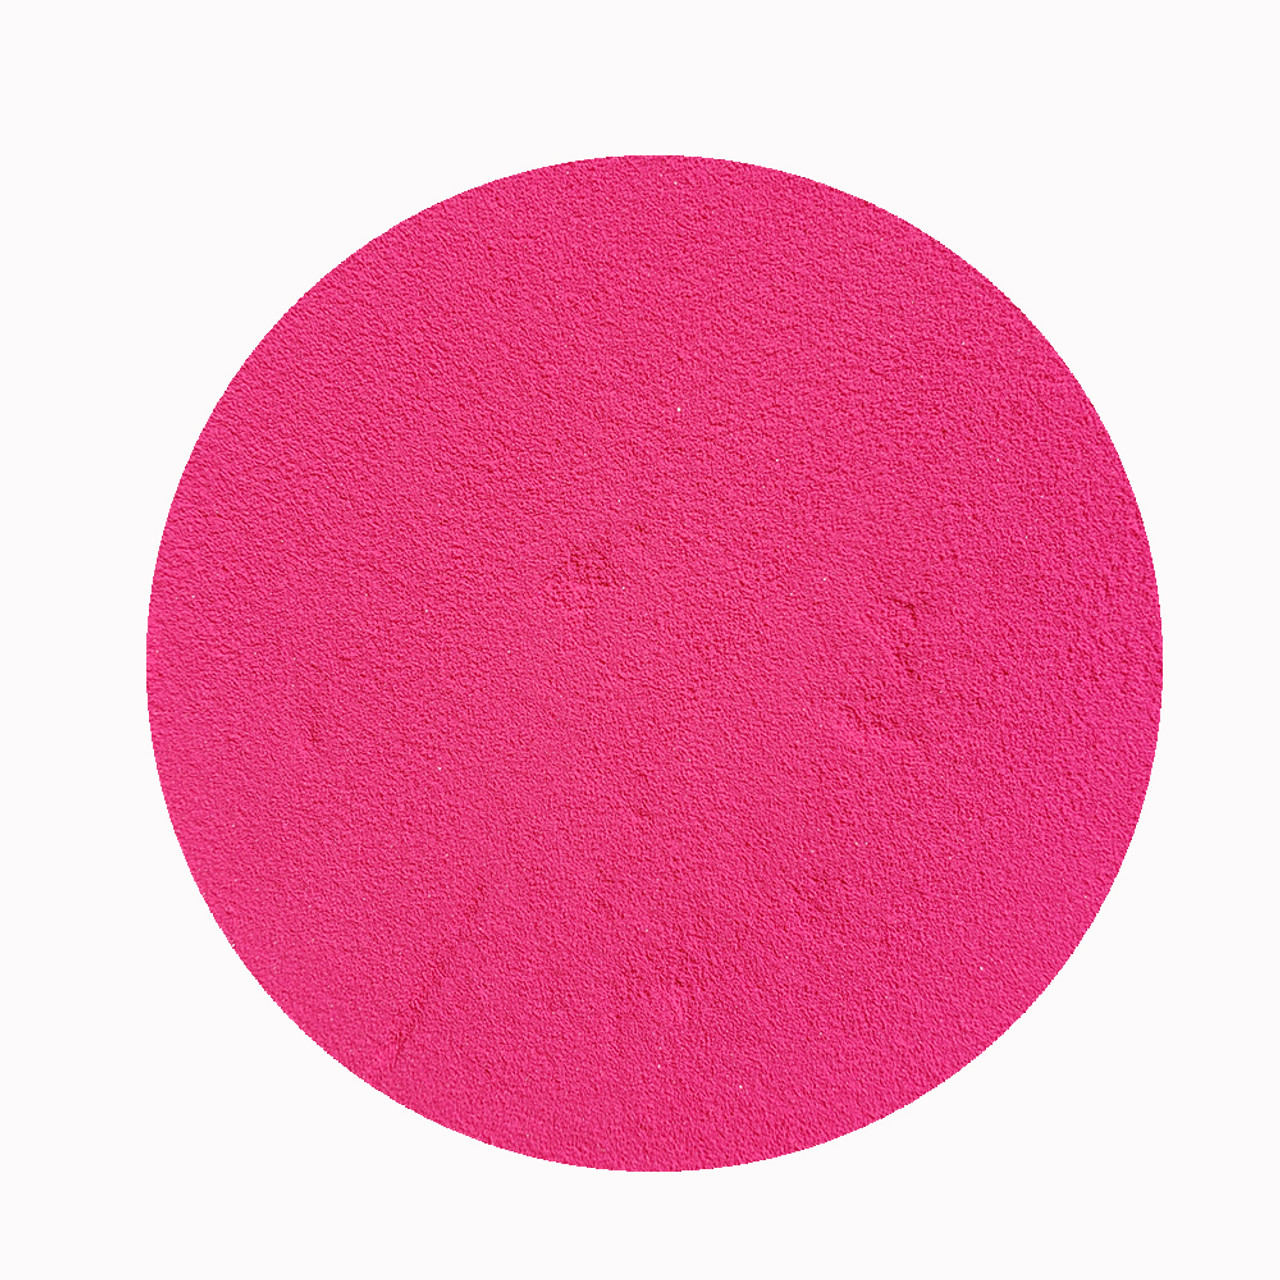 1 lb Fluorescent HOT Pink